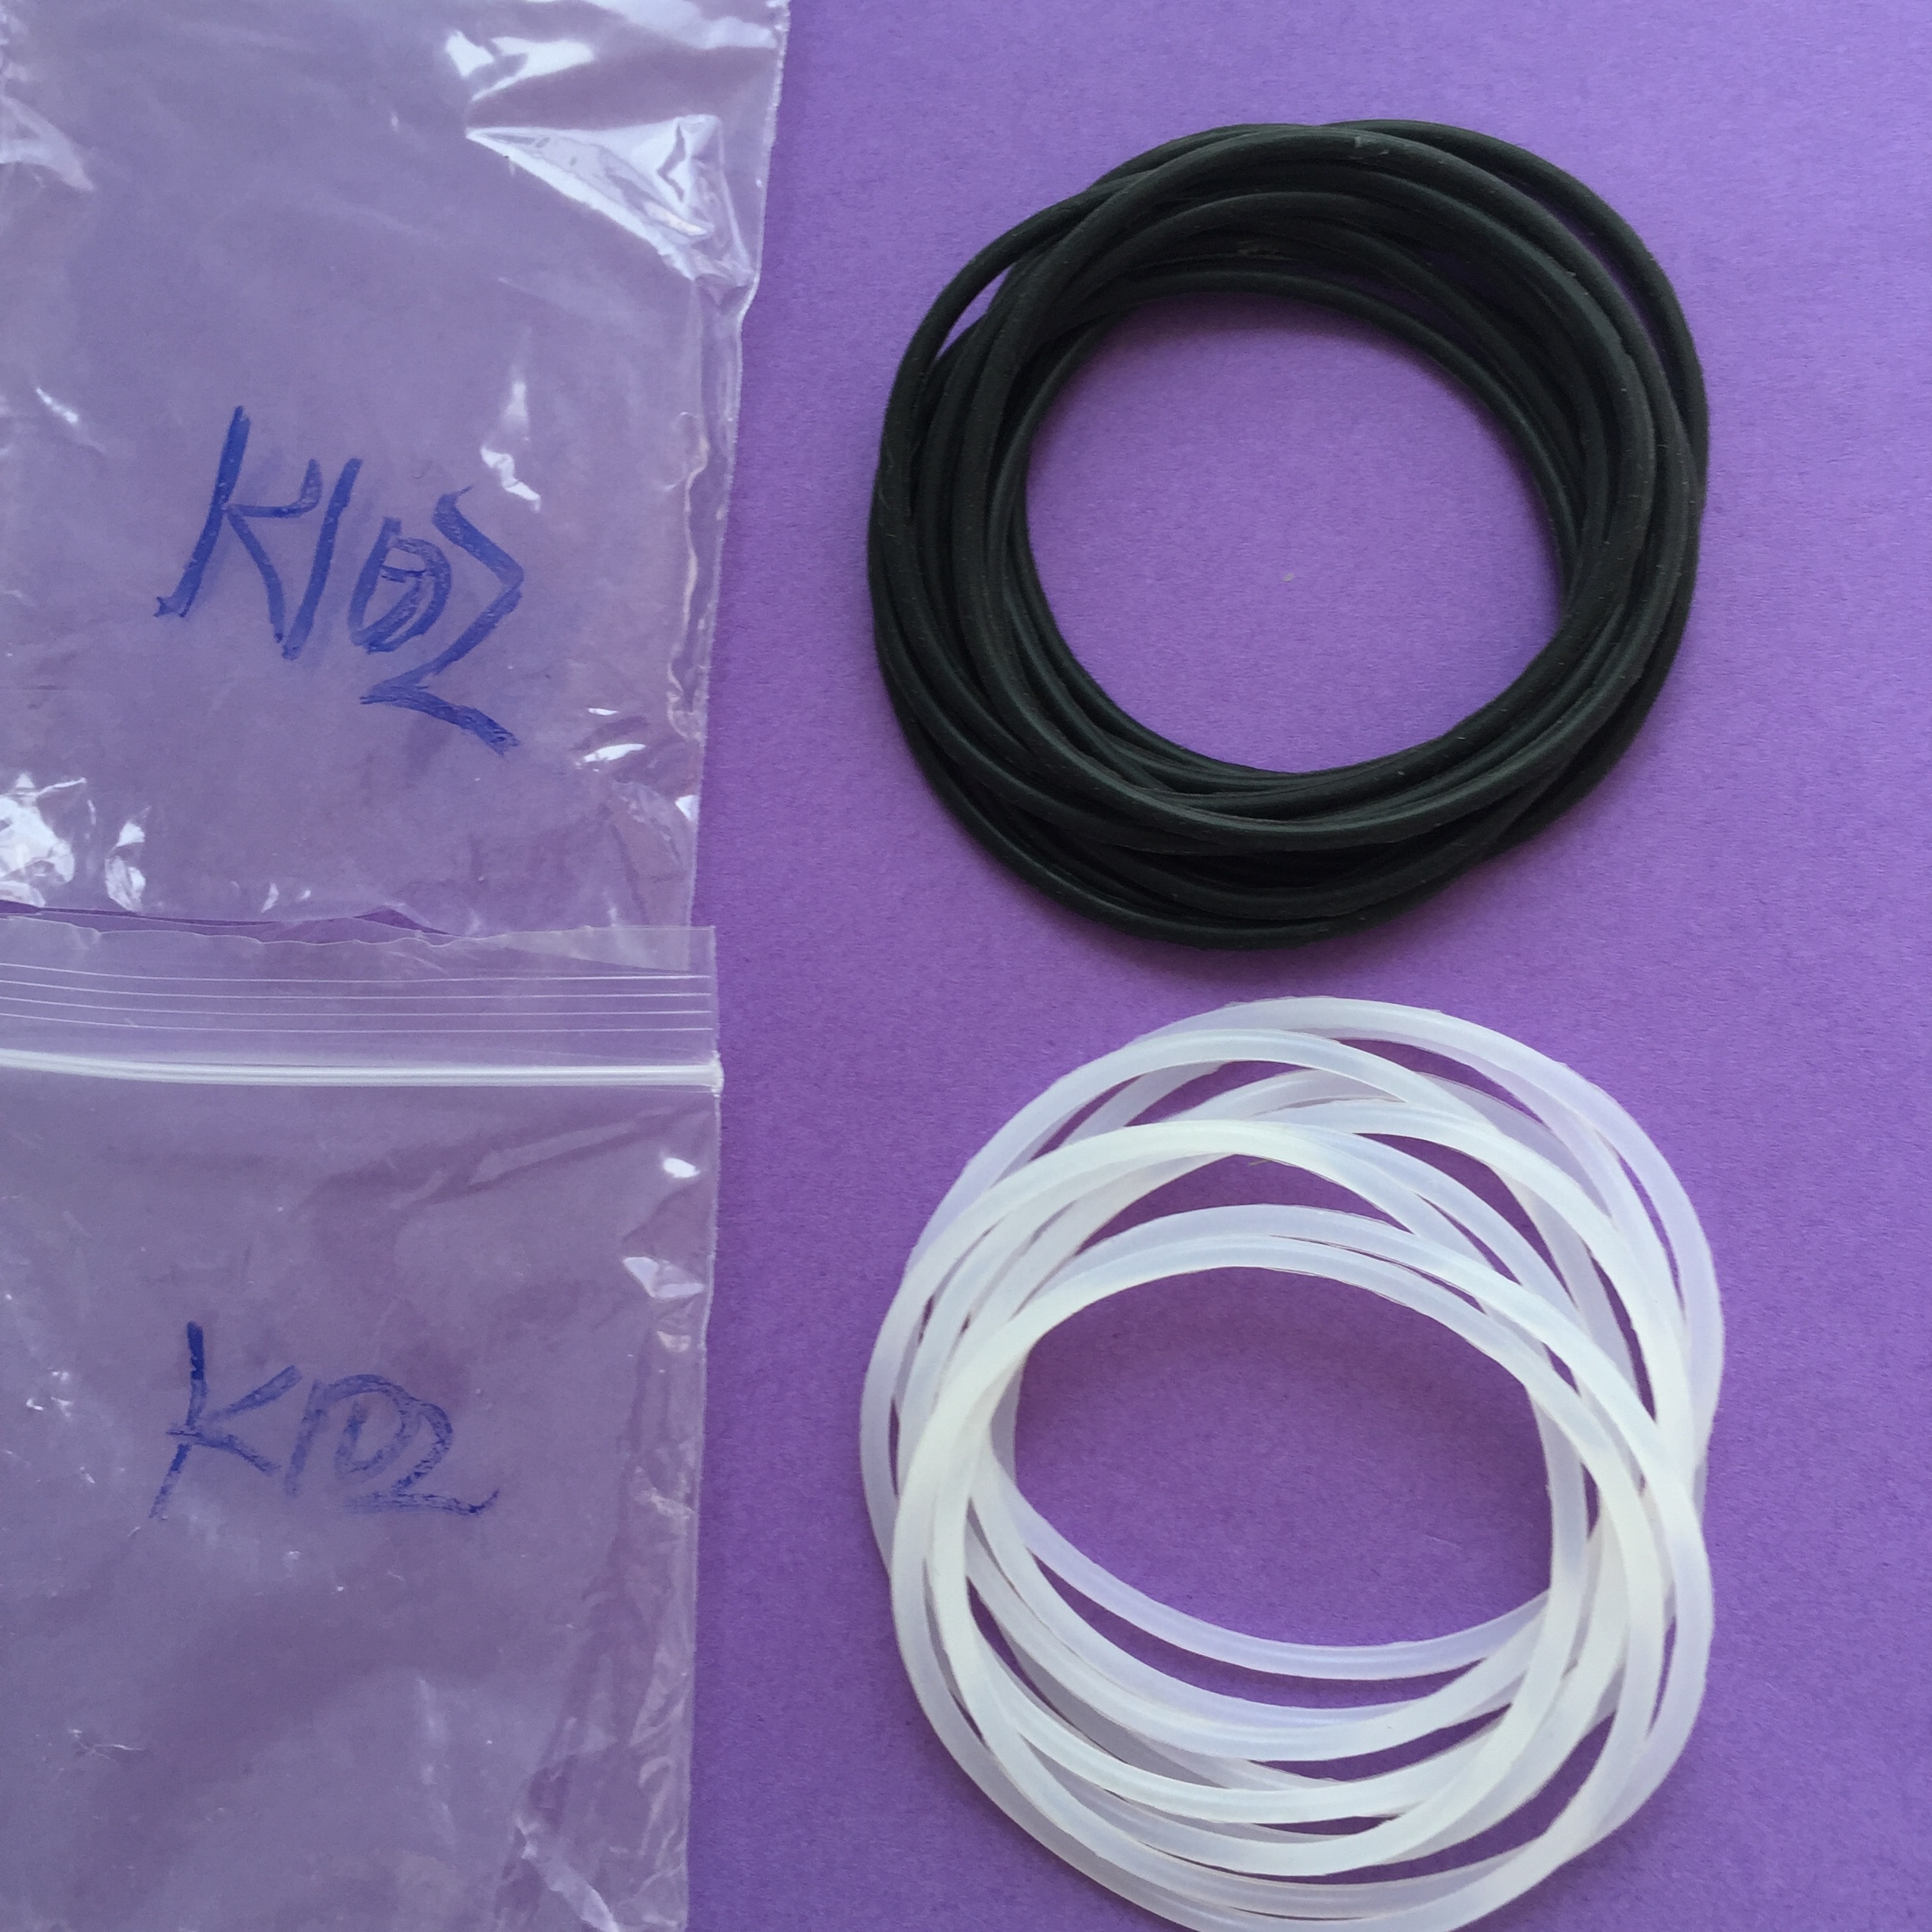 10 stks K102Y 2mm * 50mm Rubber Transportband Transmissie Riem Siliconen Band DIY Speelgoed Onderdelen Op